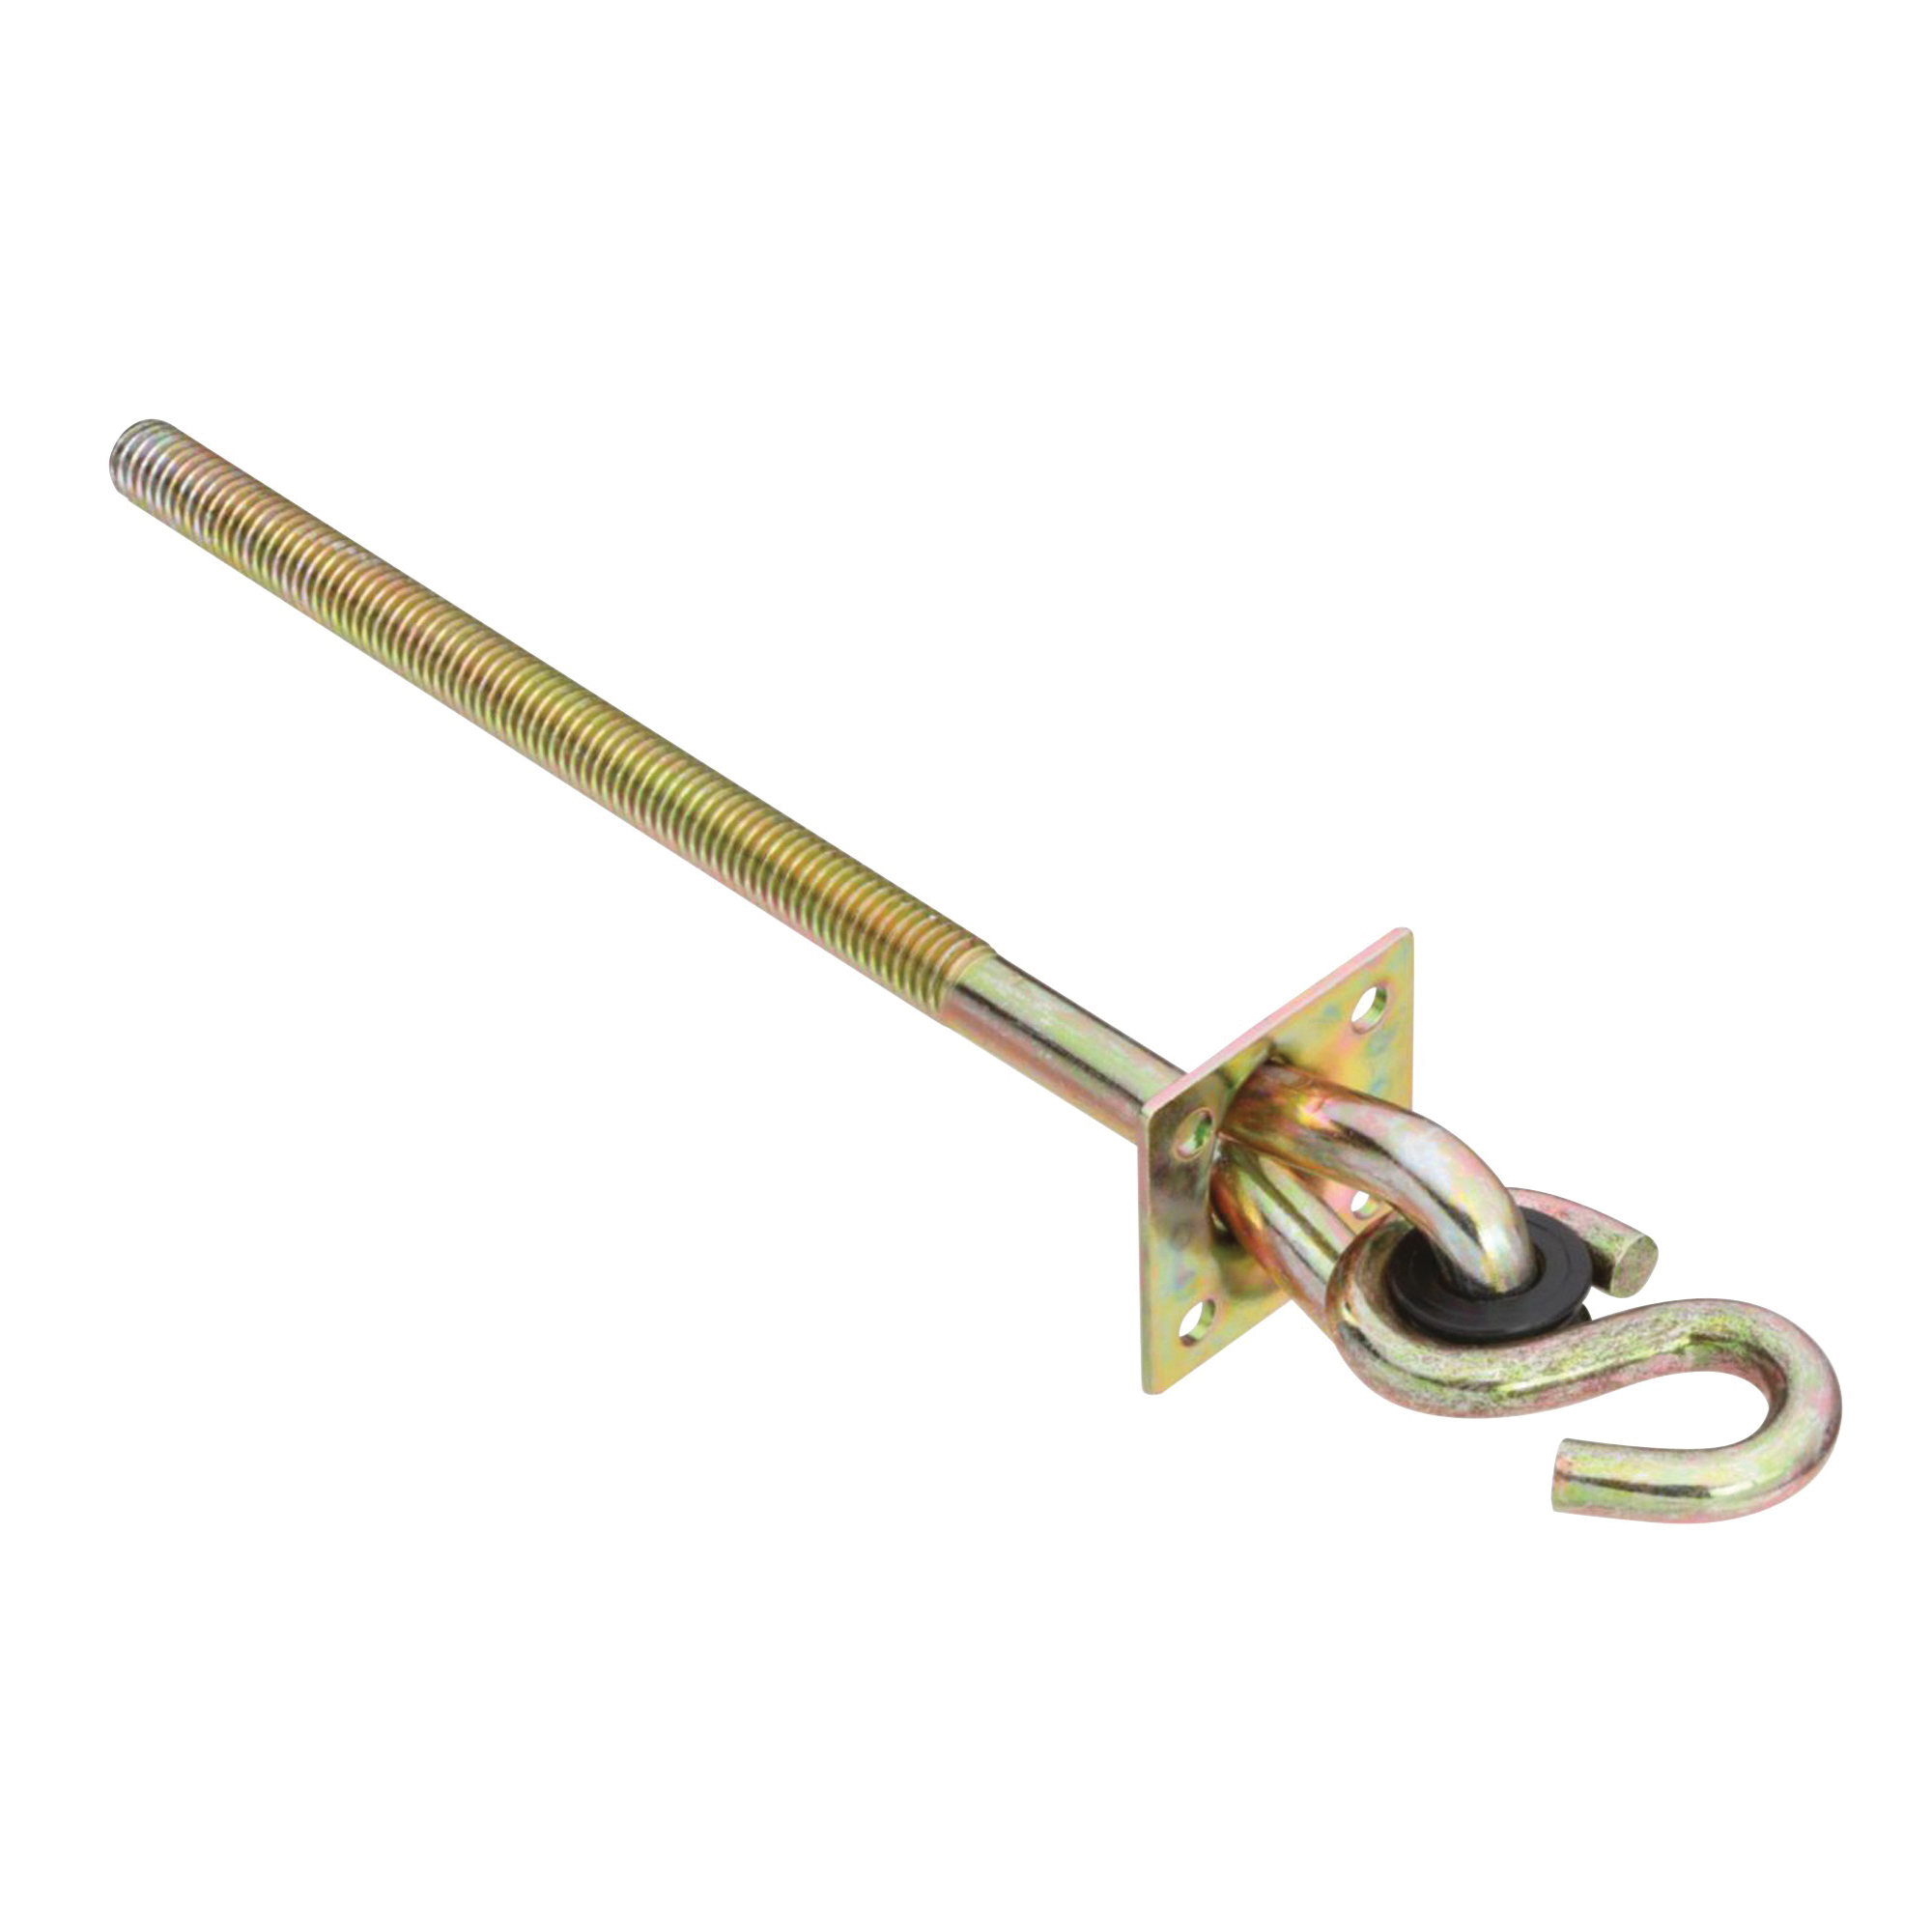 V2039 N264-077 Swing Hook Kit, 0.32 in Opening, Steel, Yellow